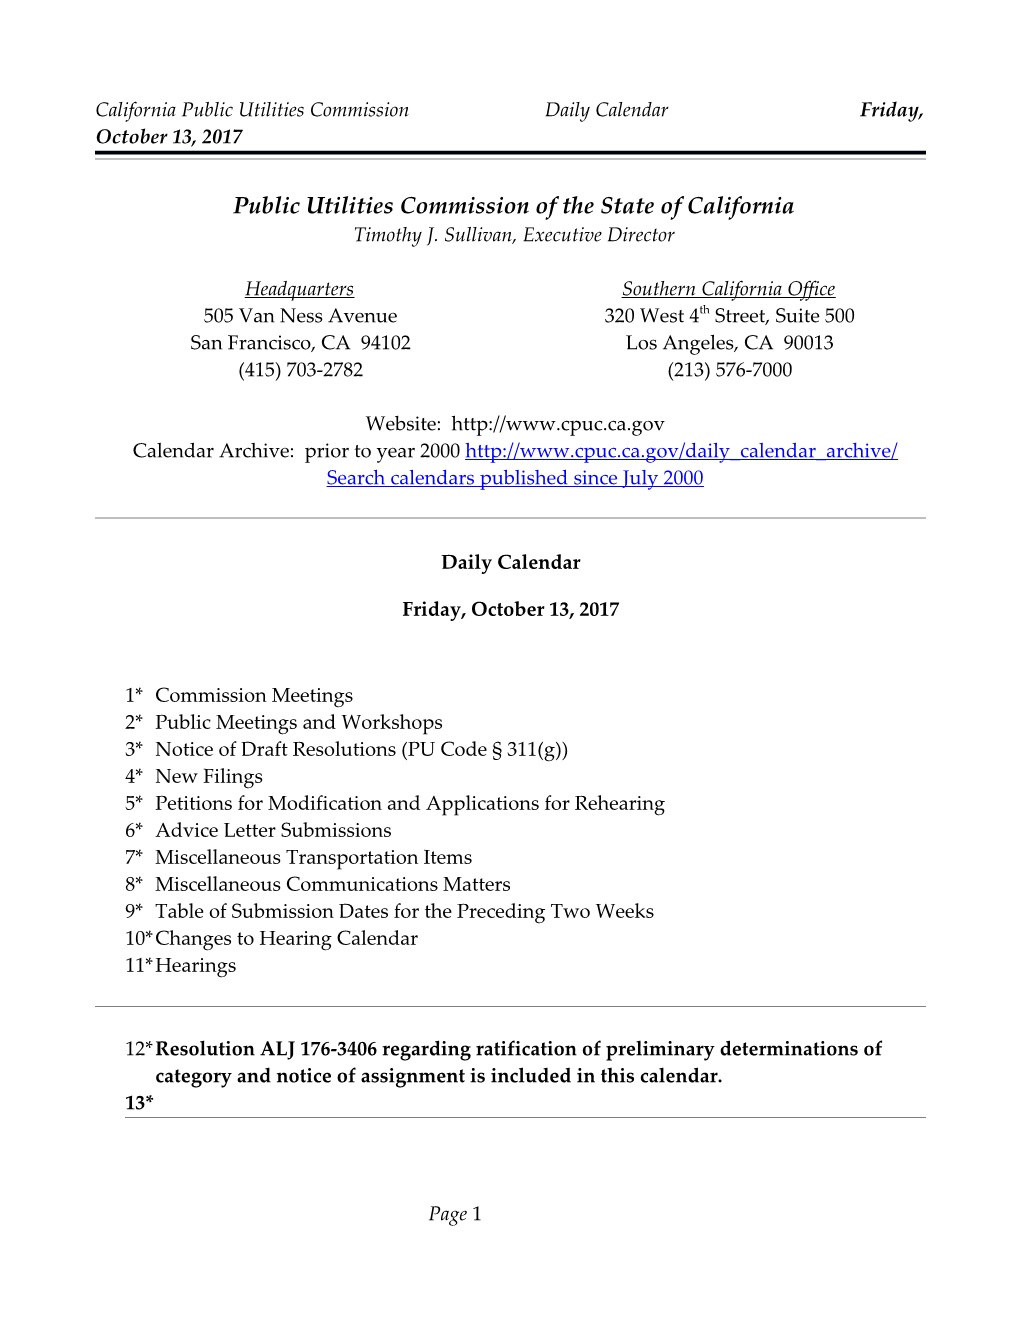 California Public Utilities Commission Daily Calendar Friday, October 13, 2017